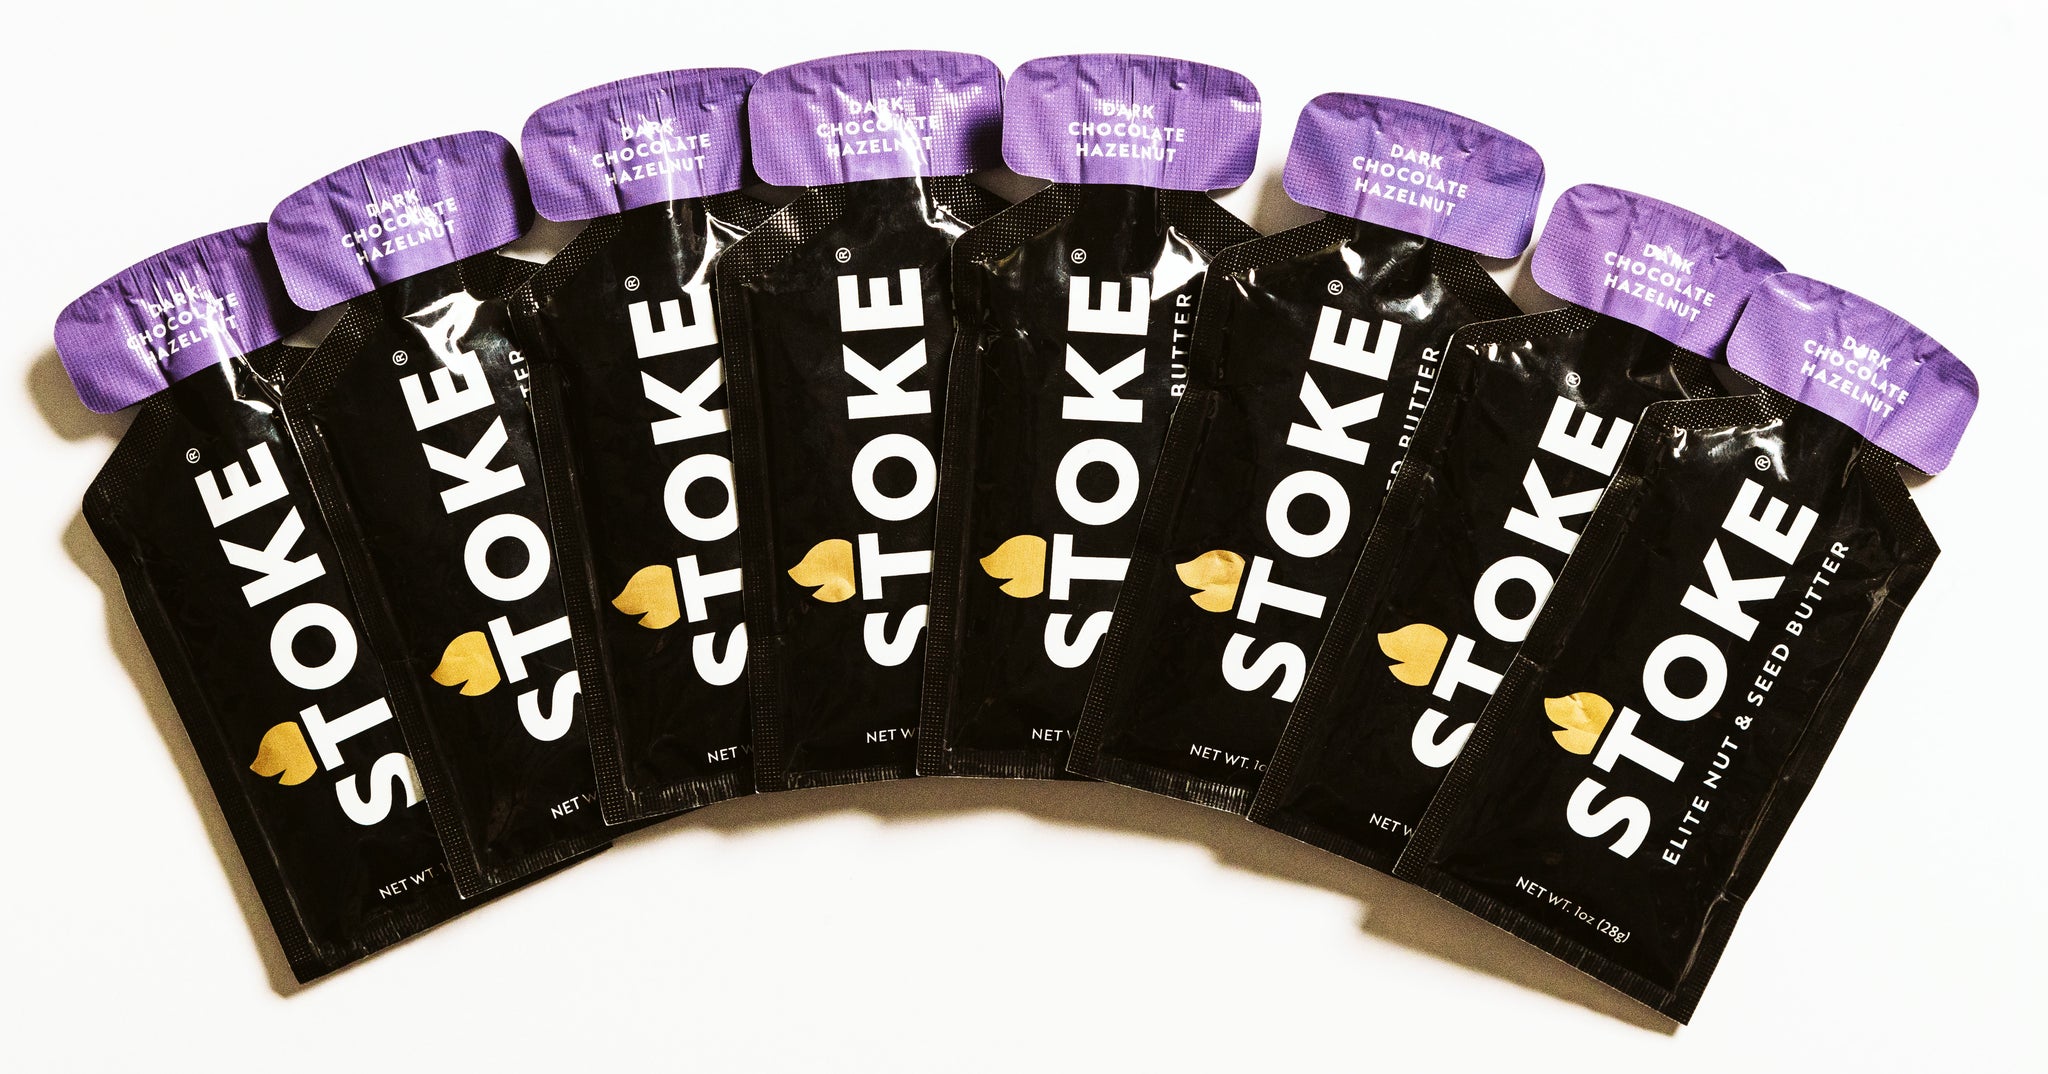 STOKE Singles: Dark Chocolate Hazelnut Fuel (8 Pack)